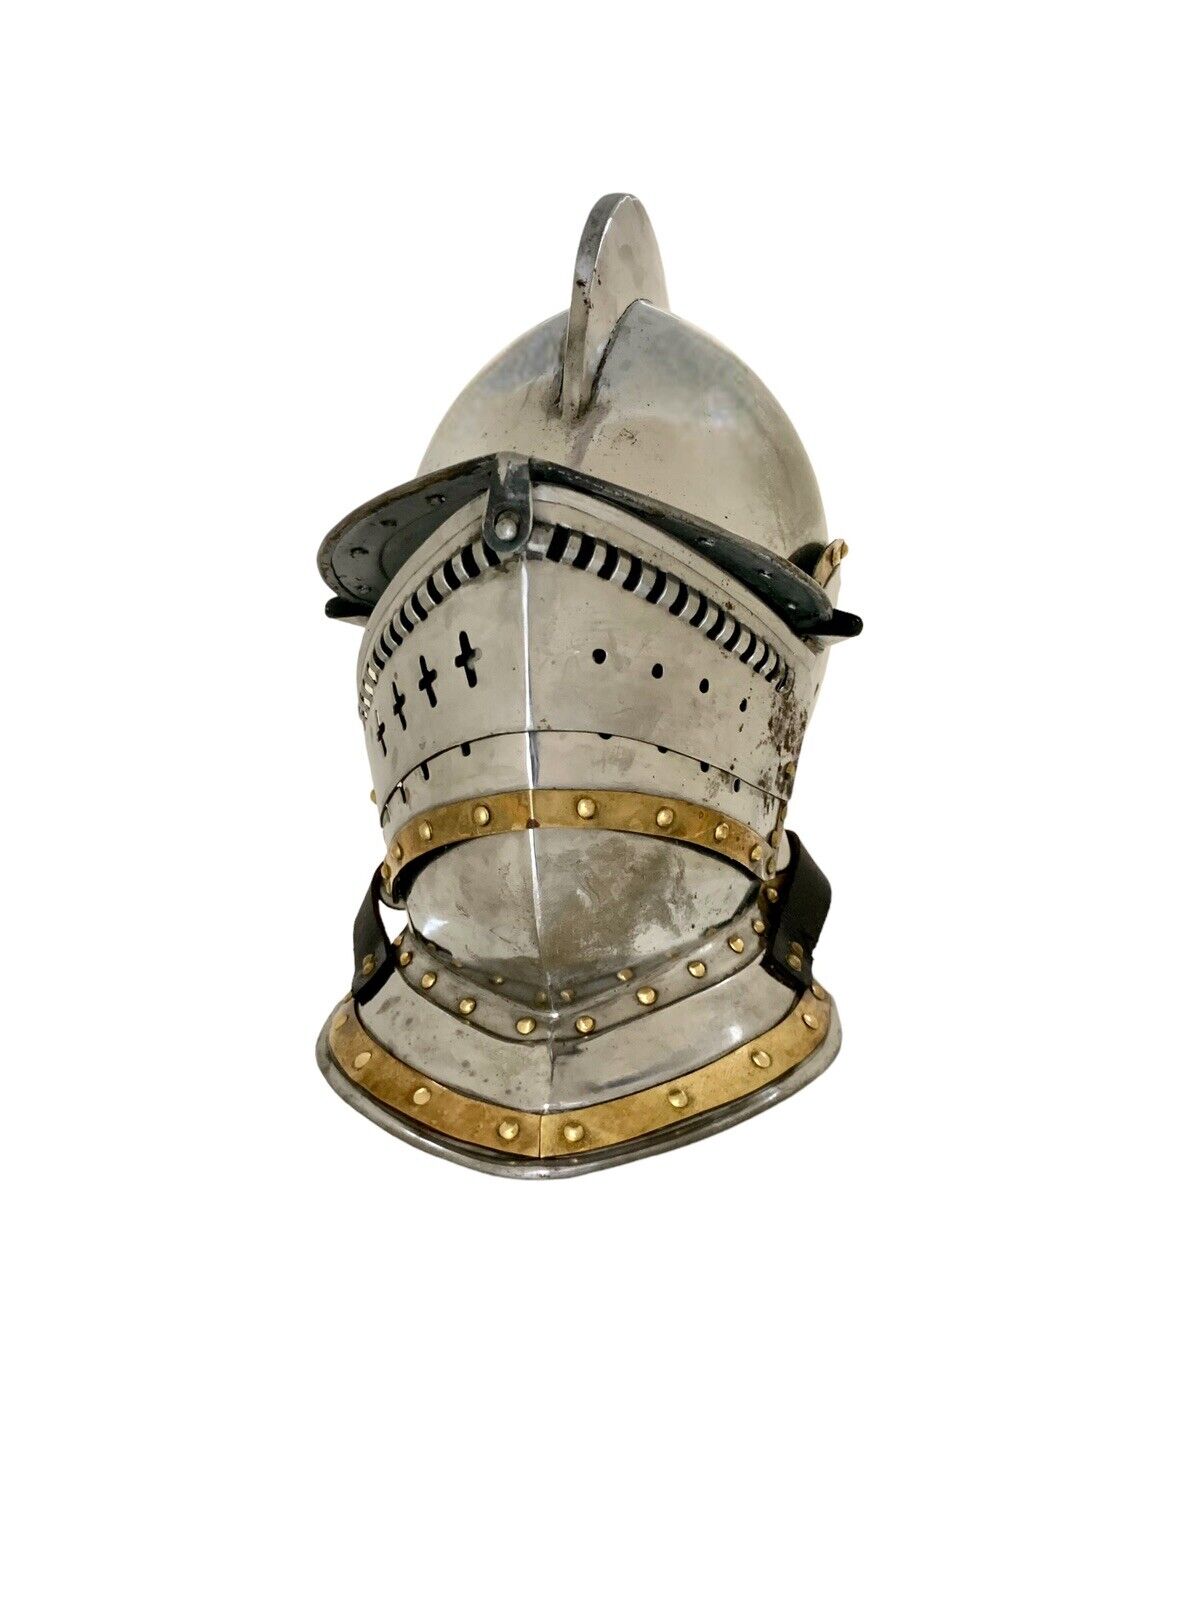 Helmet Medieval Roman Fighter Metal Armor with Protective Visor Vintage Decor